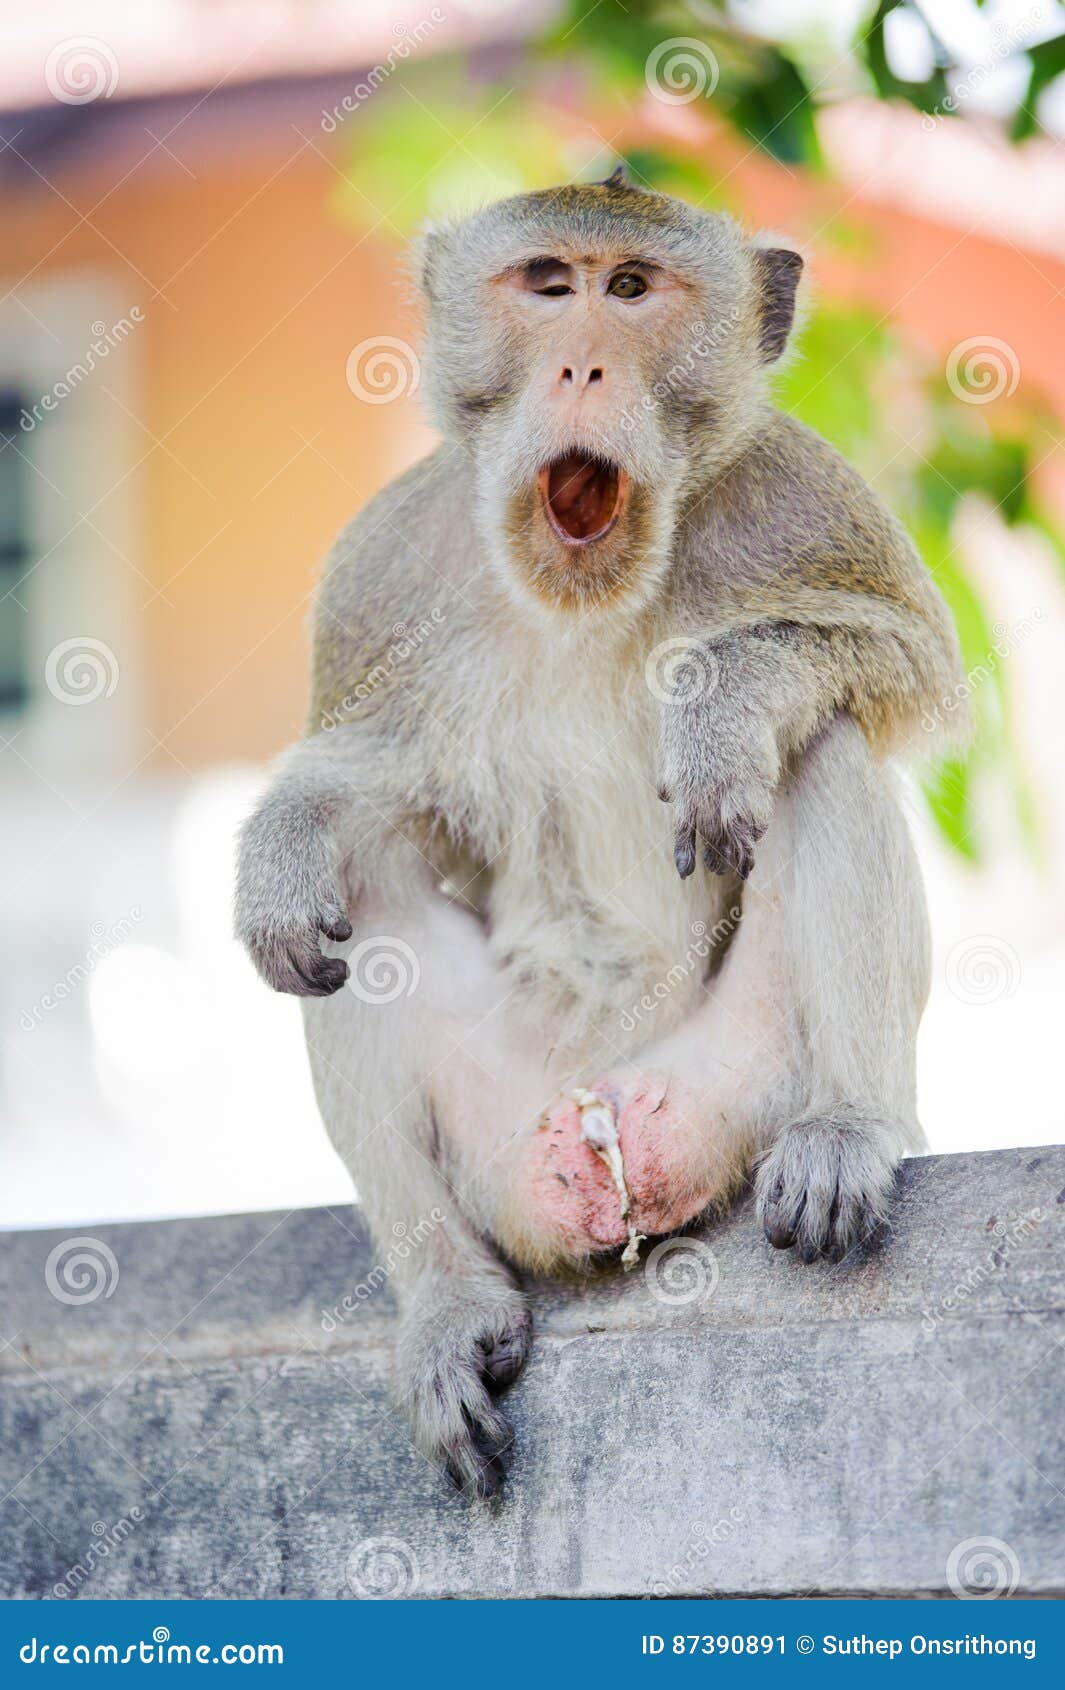 Naughty Monkey stock image. Image of food, portrait, cute - 87390891